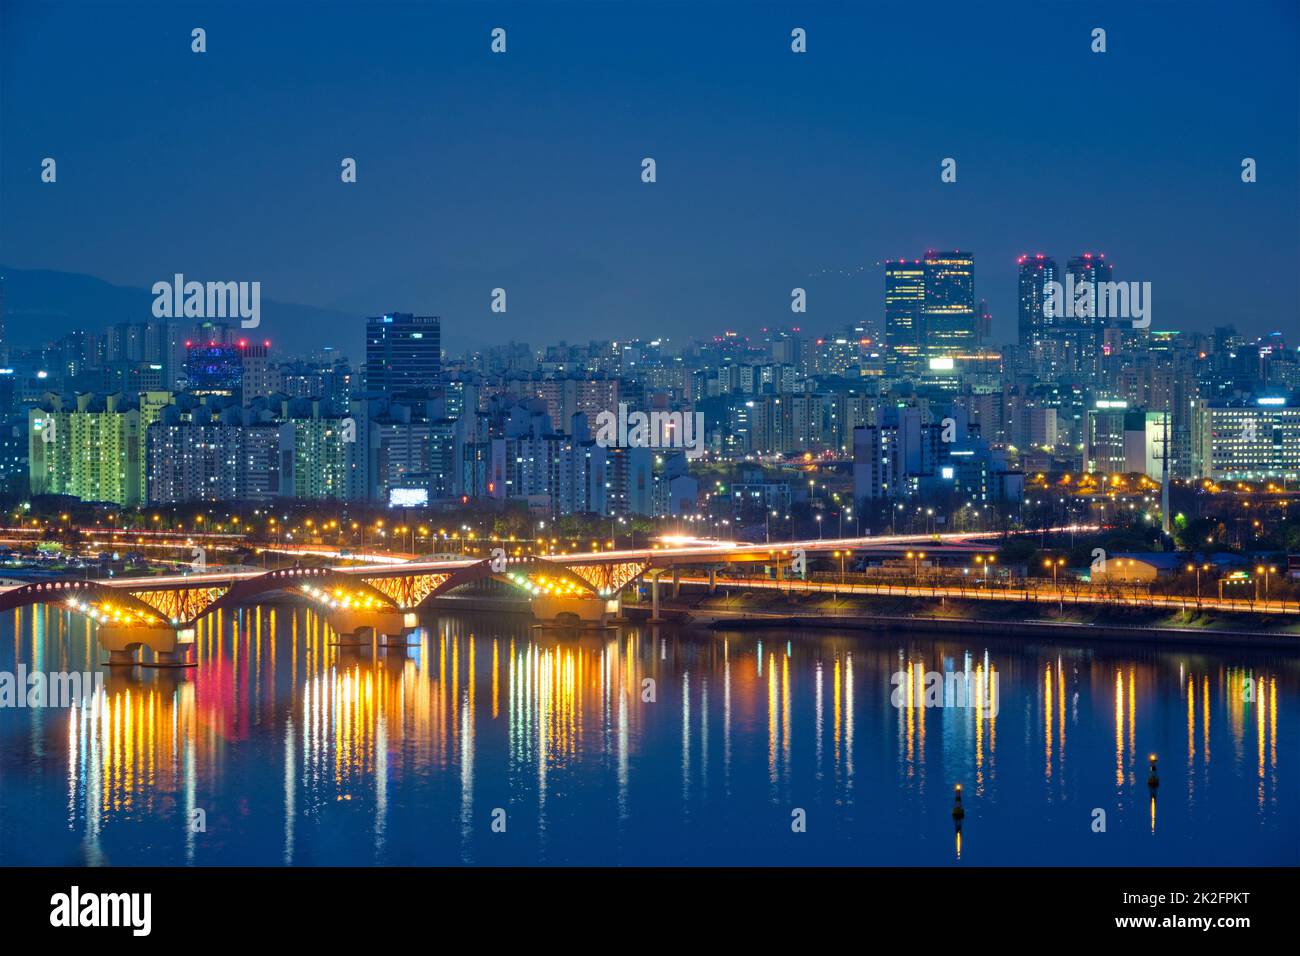 Seoul night view, South Korea Stock Photo